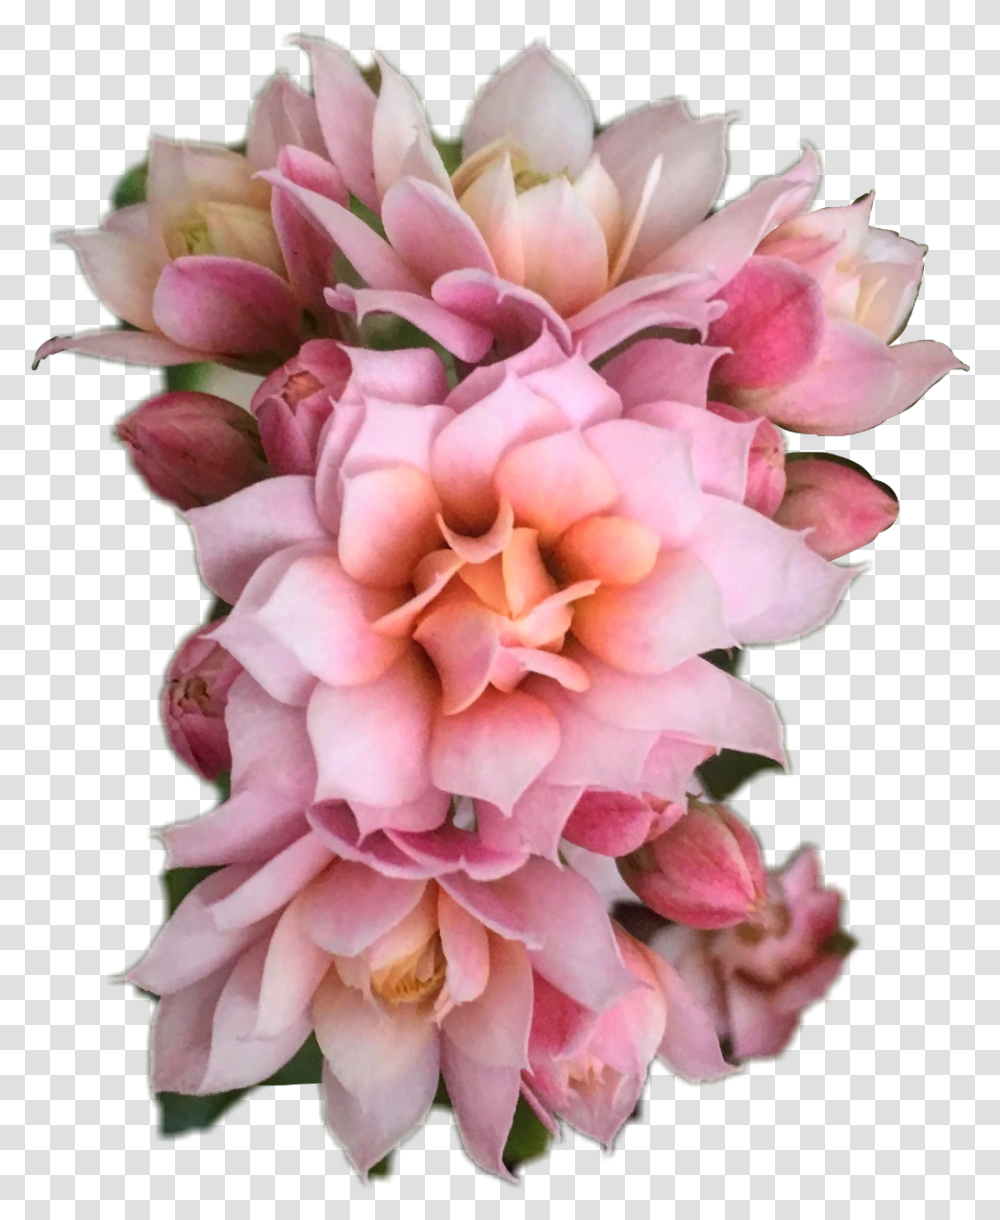 Download Hd Bouquet Flowers Overlay Flower Flower Overlays For Edits, Plant, Blossom, Flower Bouquet, Flower Arrangement Transparent Png